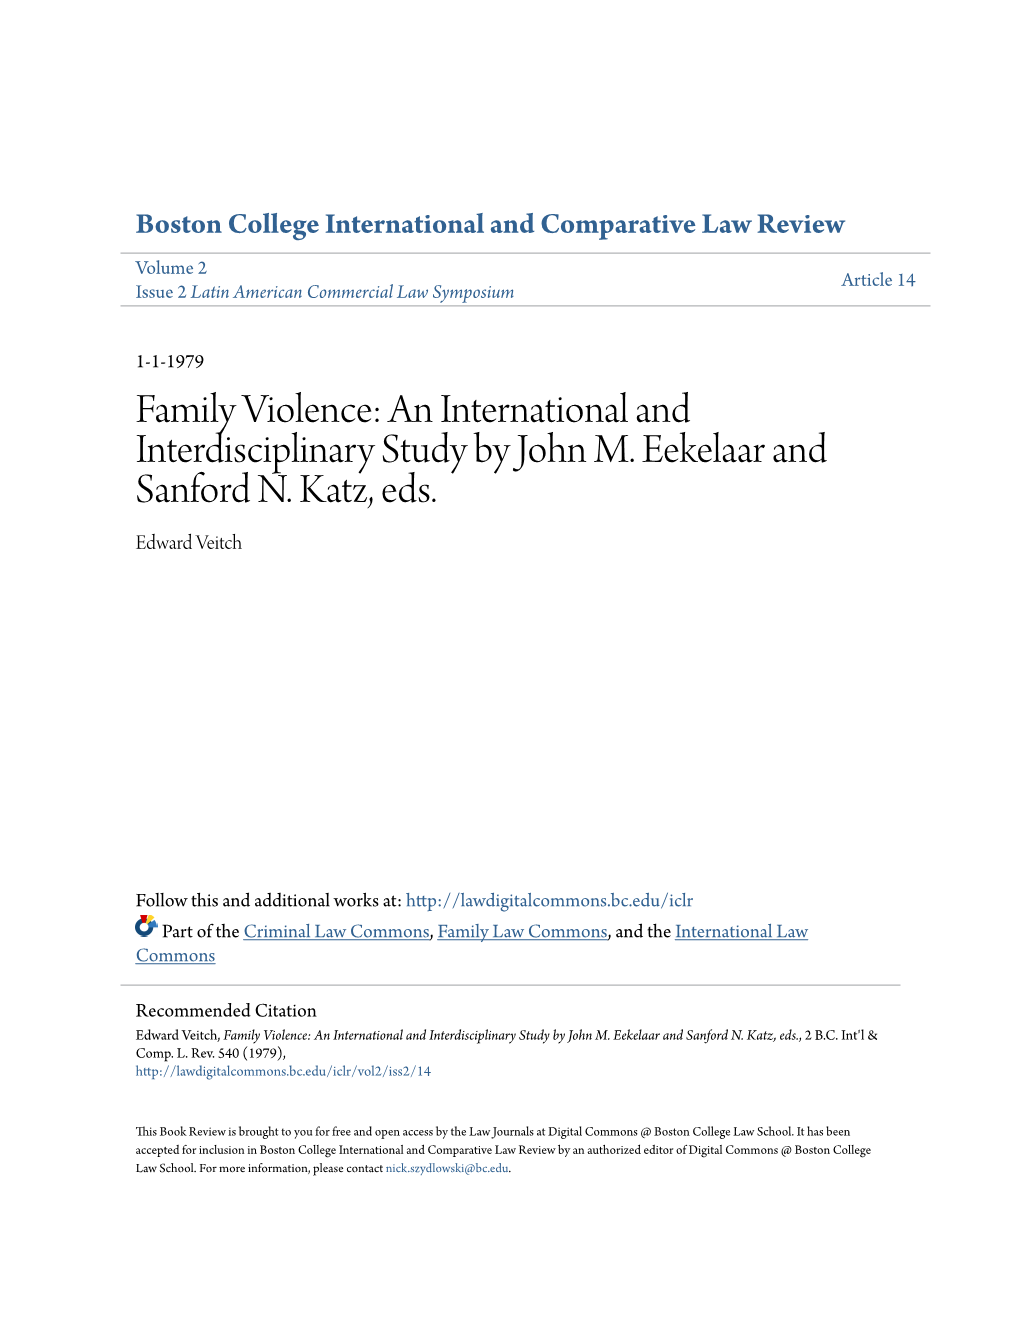 Family Violence: an International and Interdisciplinary Study by John M